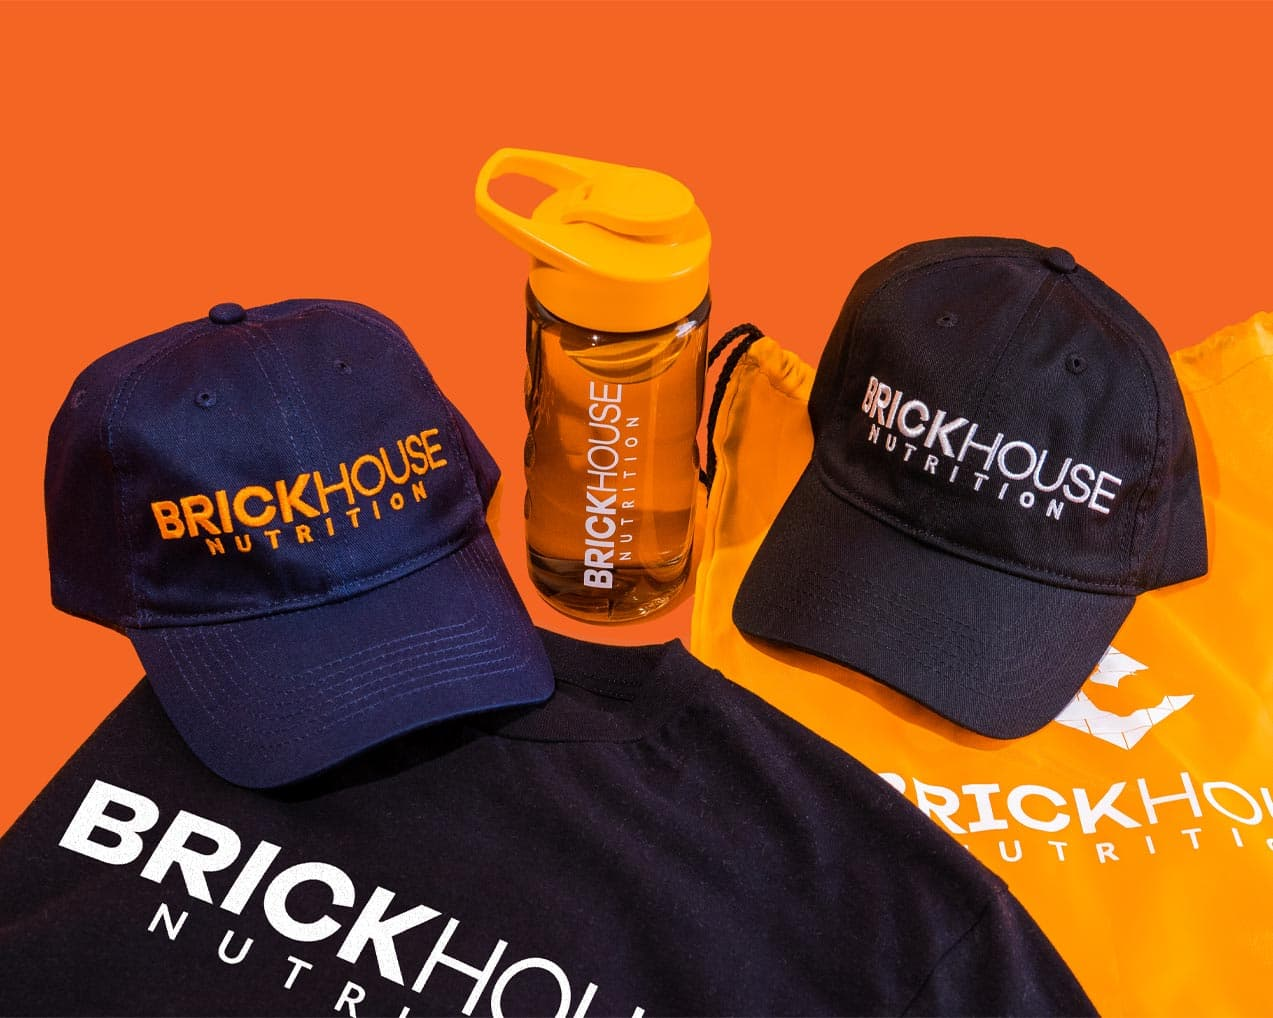 BrickHouse Nutrition swag